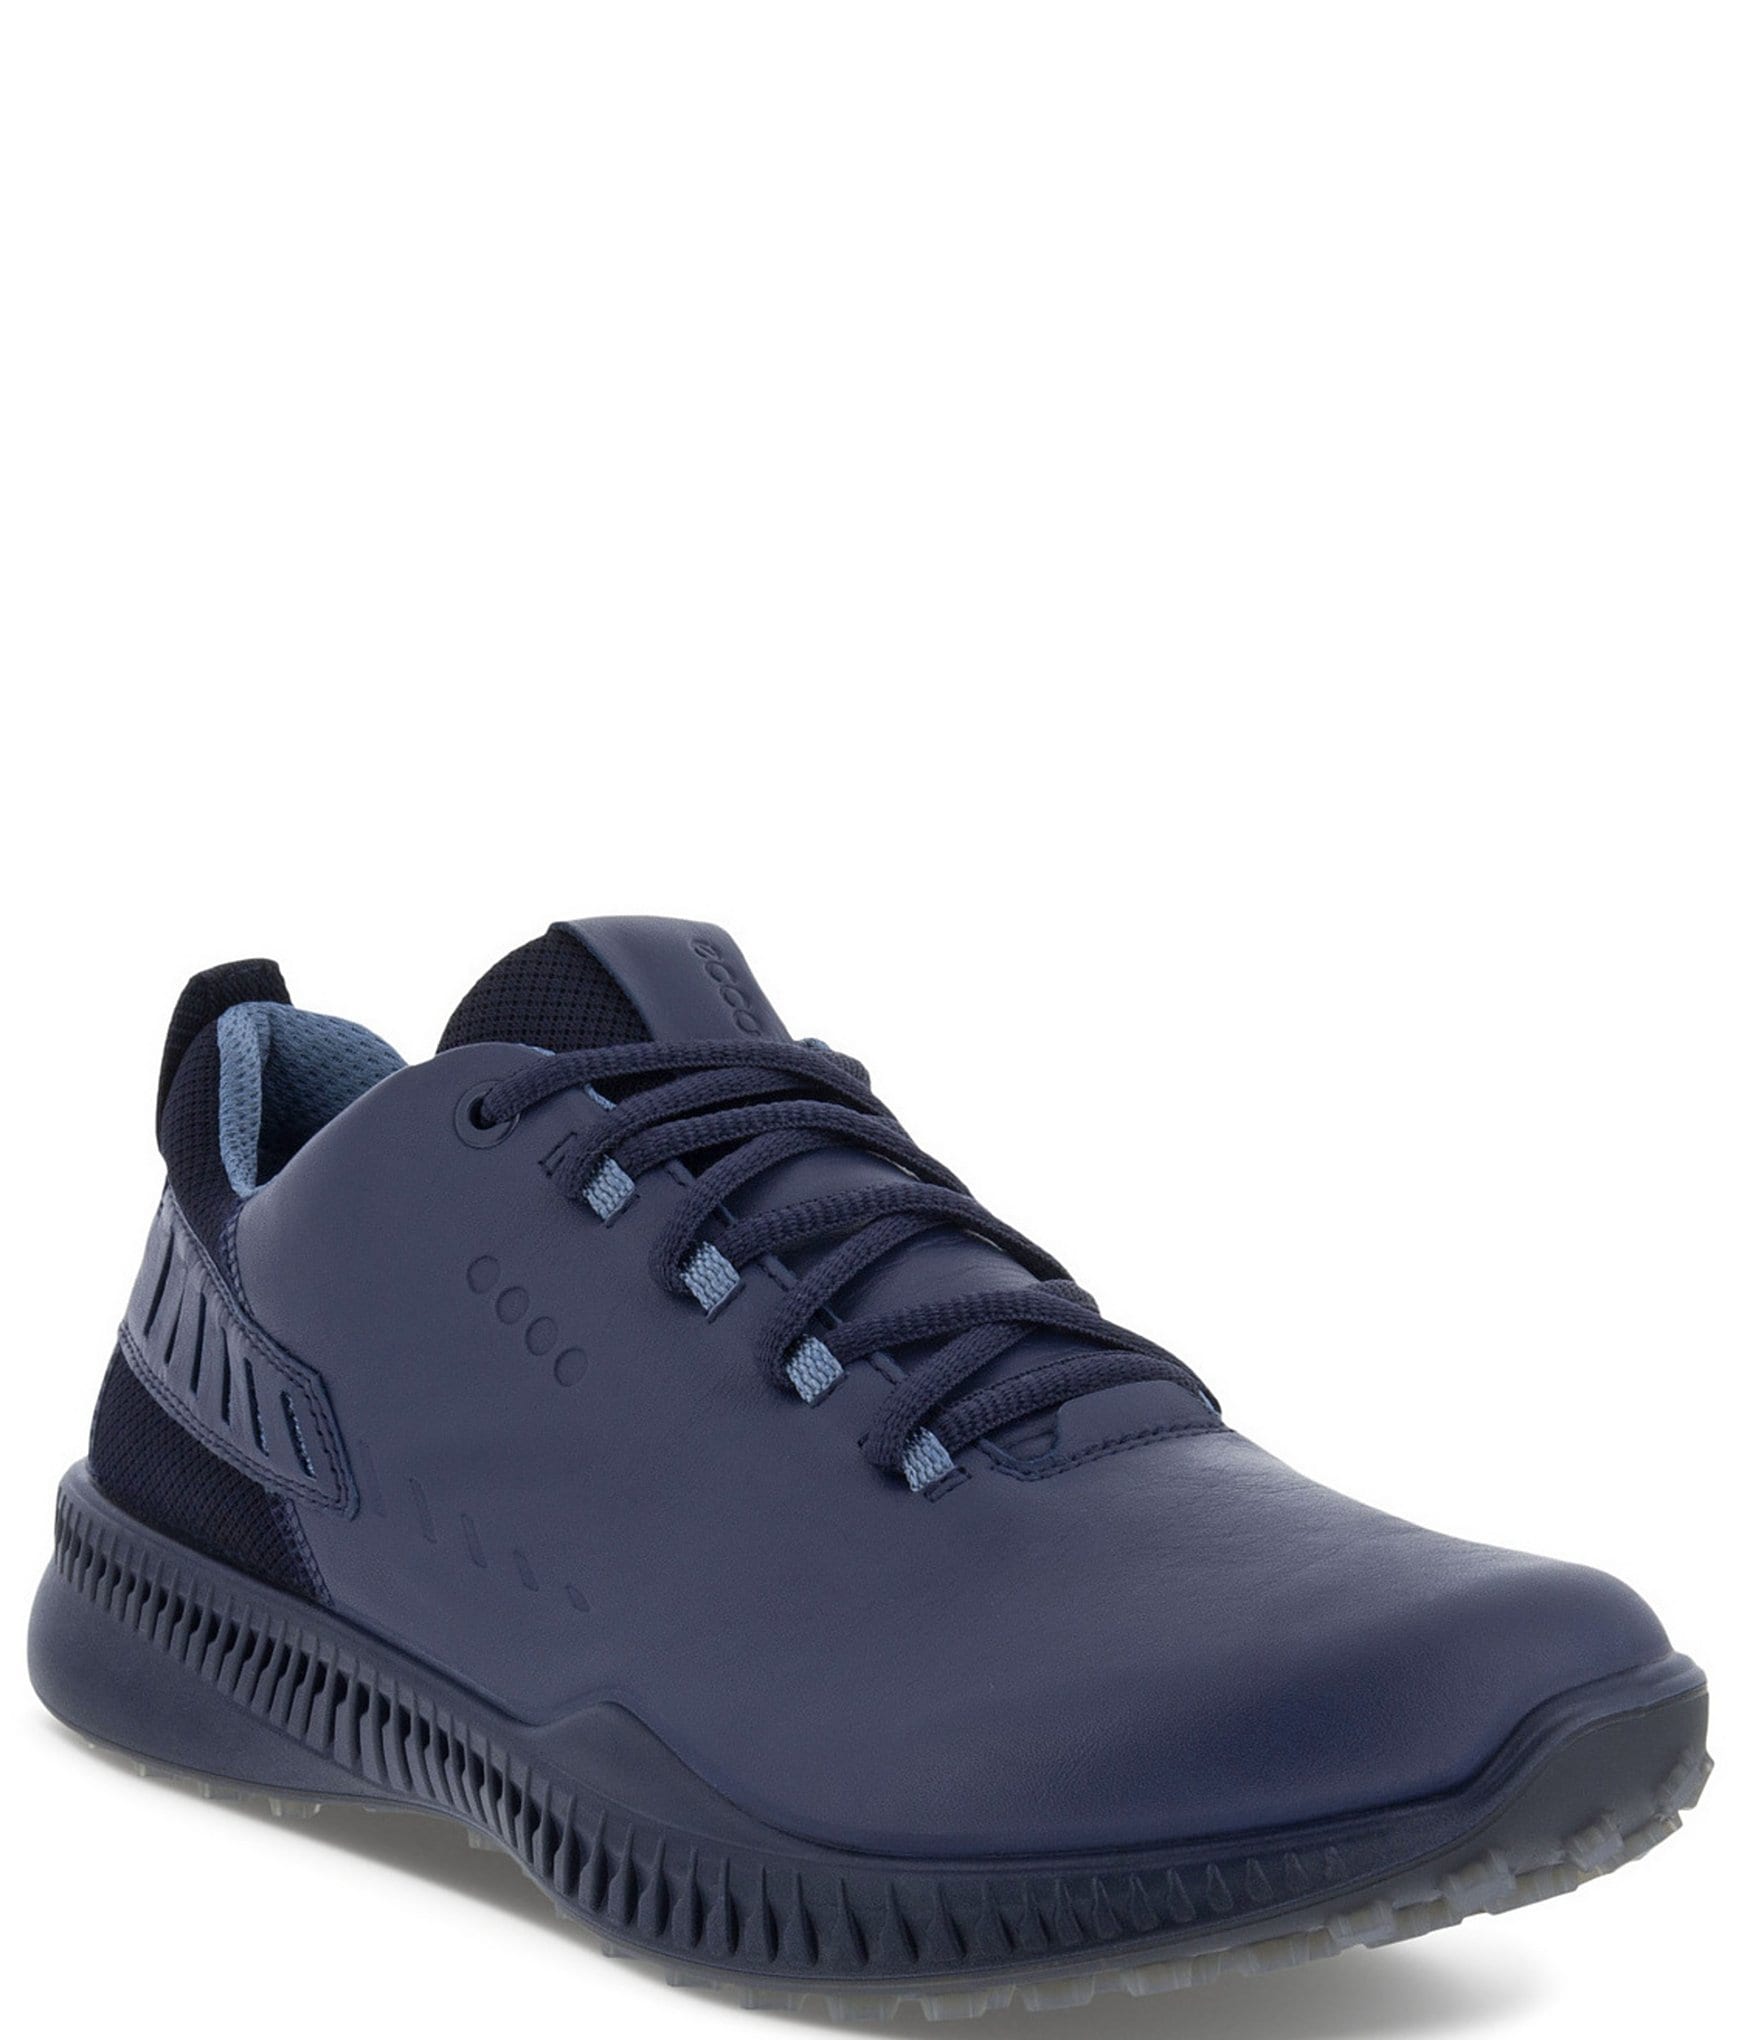 ECCO Men's S-Drive Water Repellent Yak Leather Golf Shoes | Dillard's